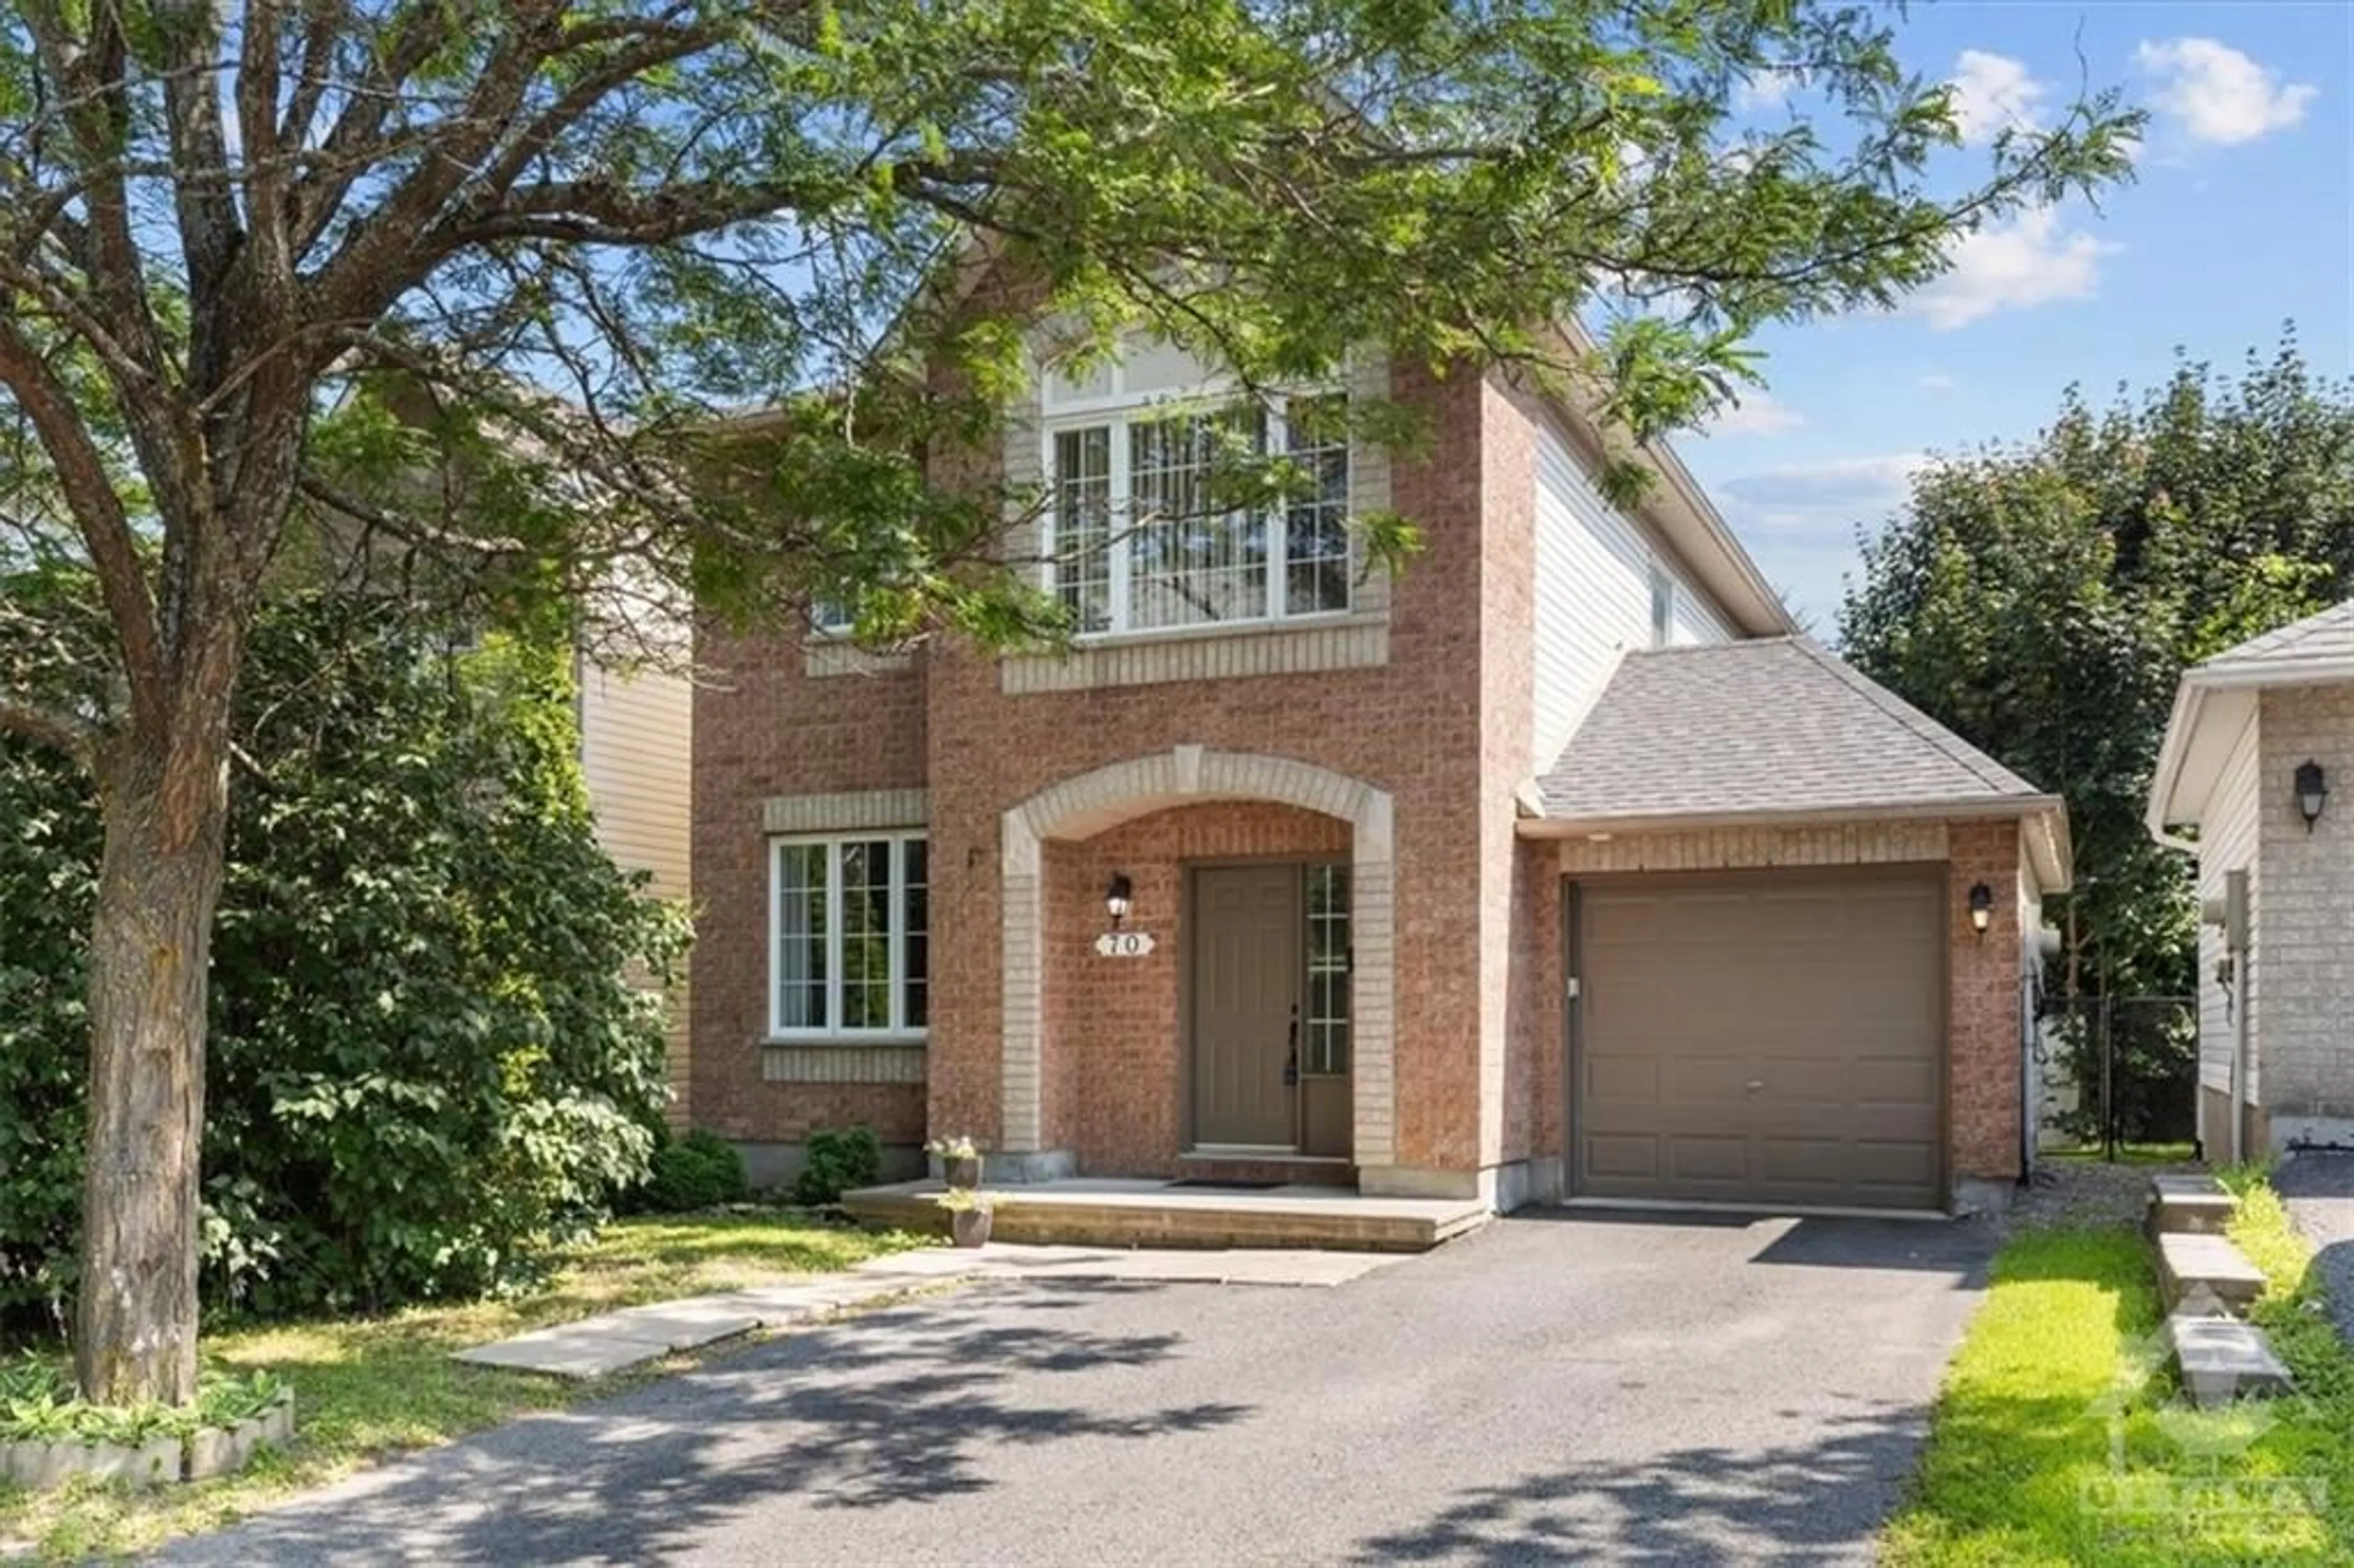 Home with brick exterior material for 70 MERSEY Ave, Kanata Ontario K2K 3A6